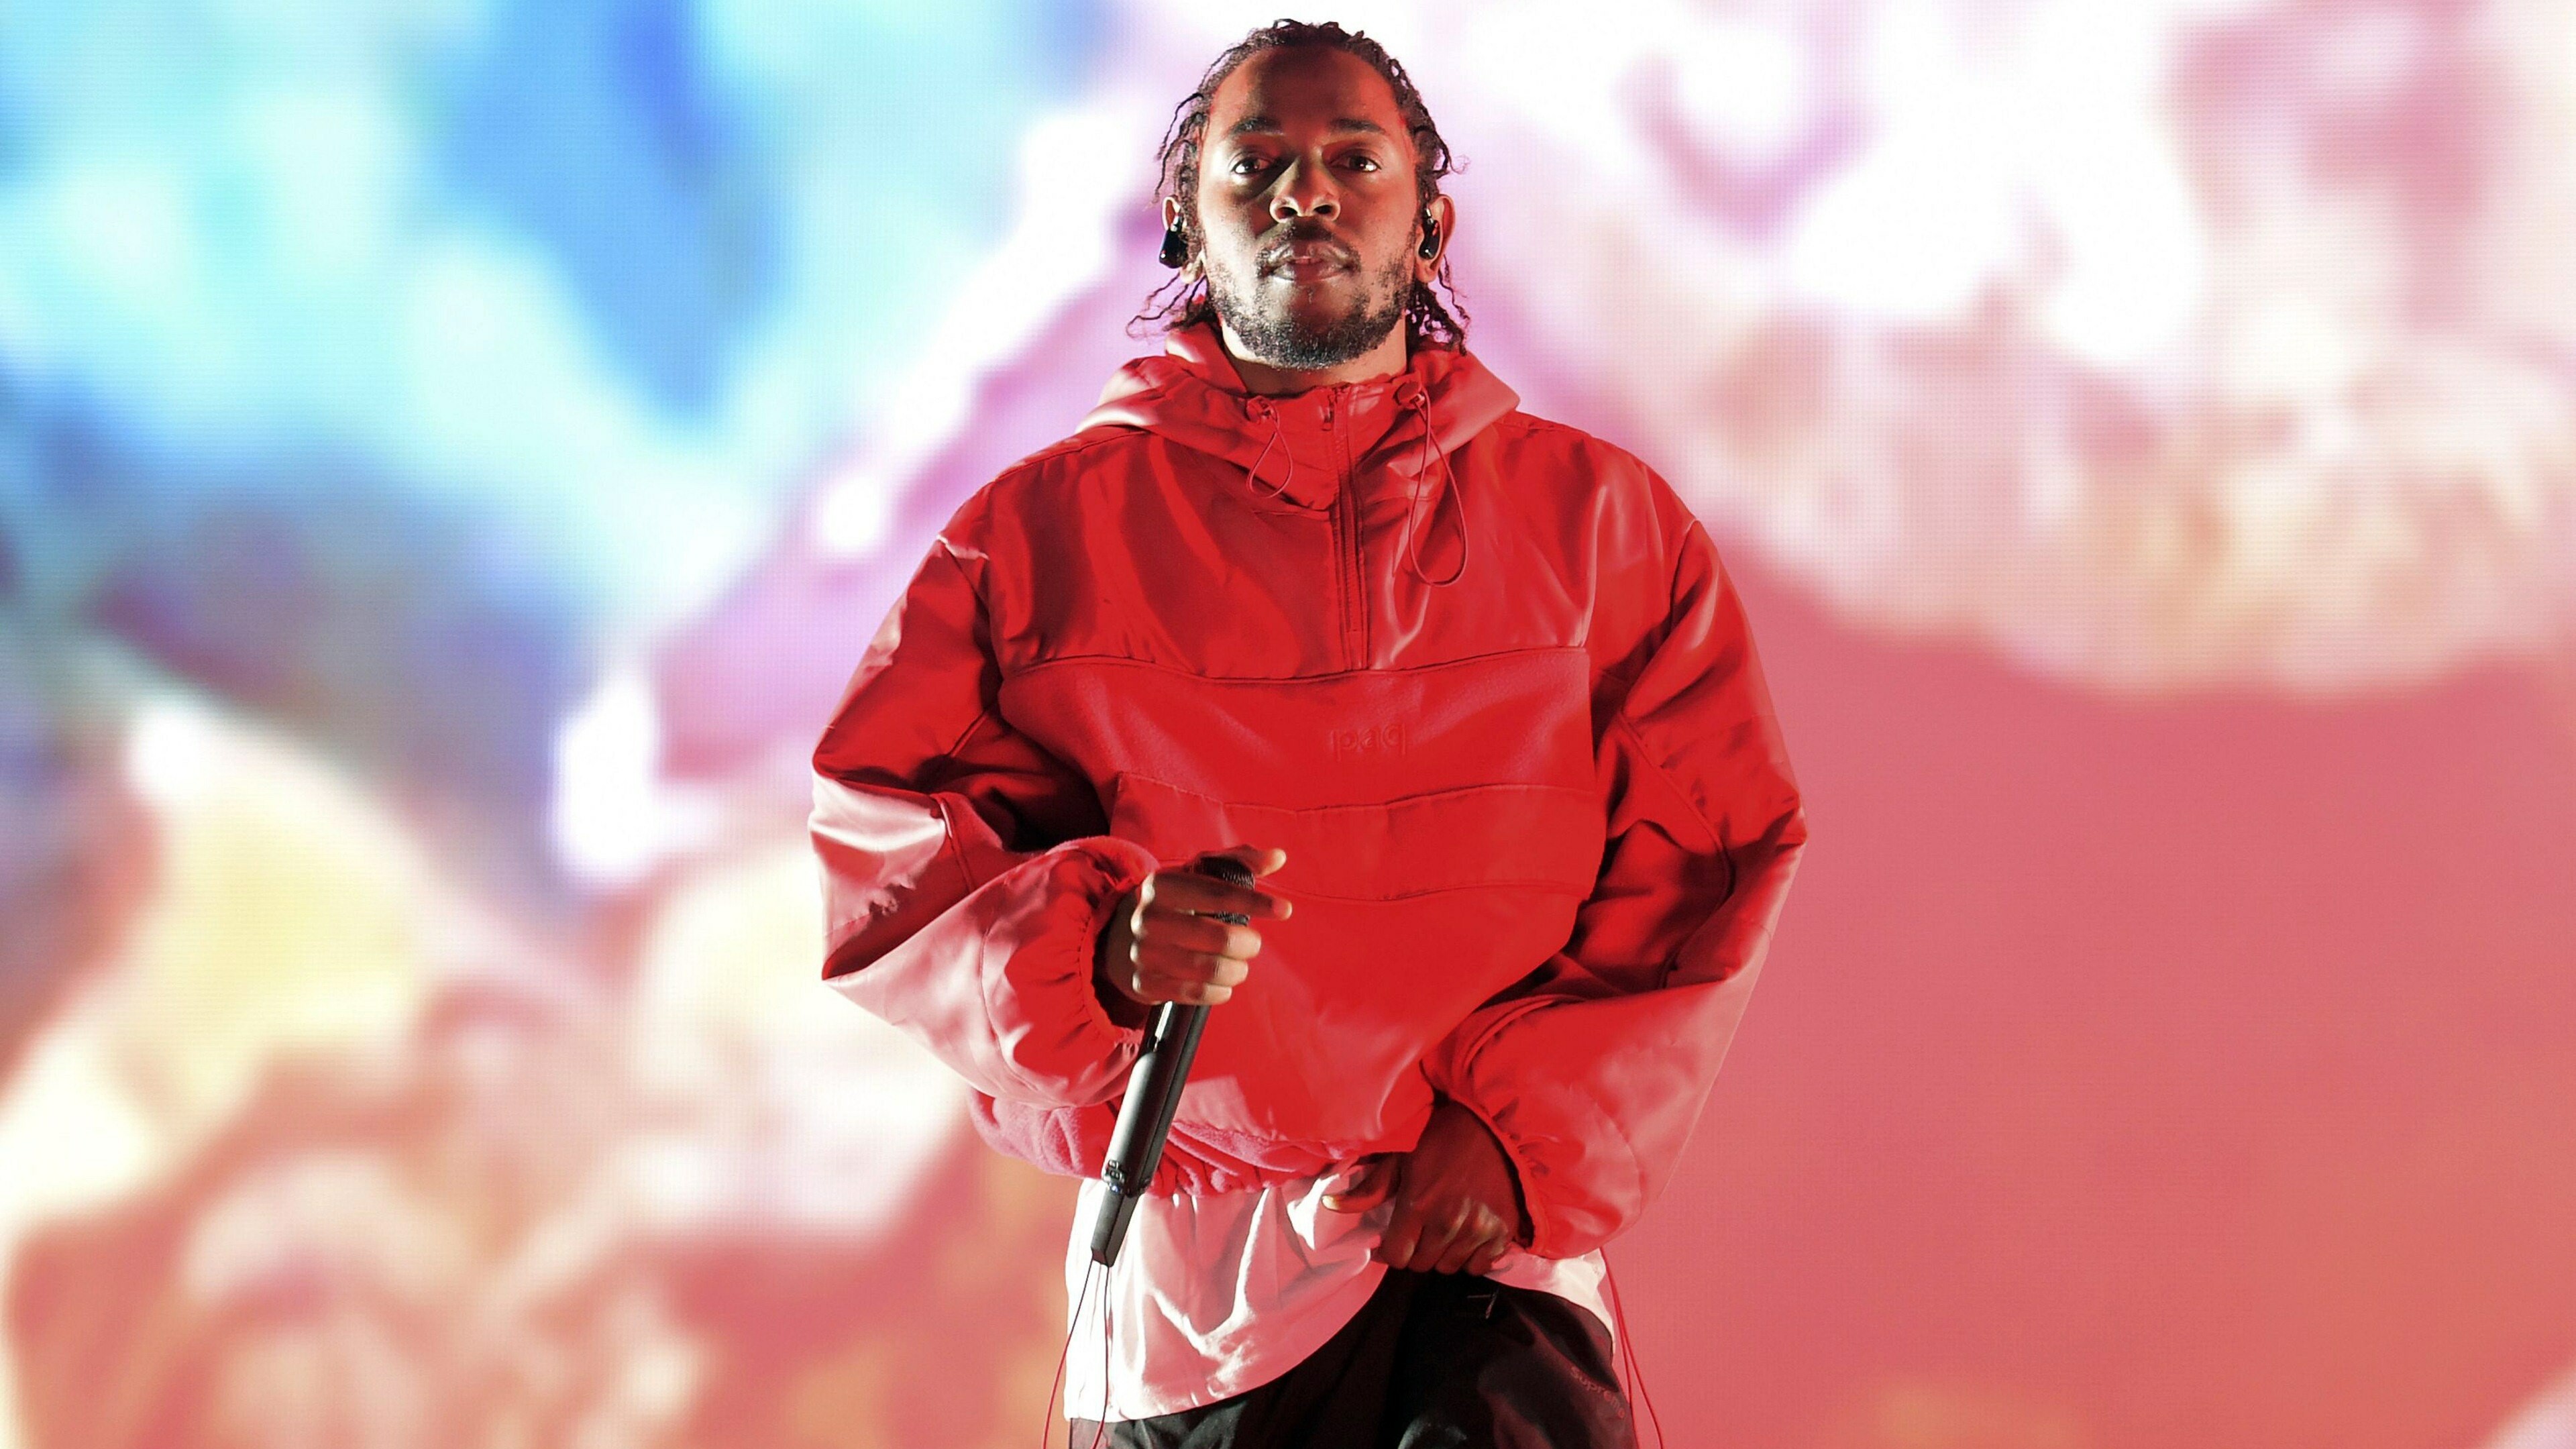 HD wallpaper, Kendrick Lamar, Desktop 4K Kendrick Lamar Background Image, Captivating Visuals, Inspirational Lyrics, 3840X2160 4K Desktop, Artistic Expression